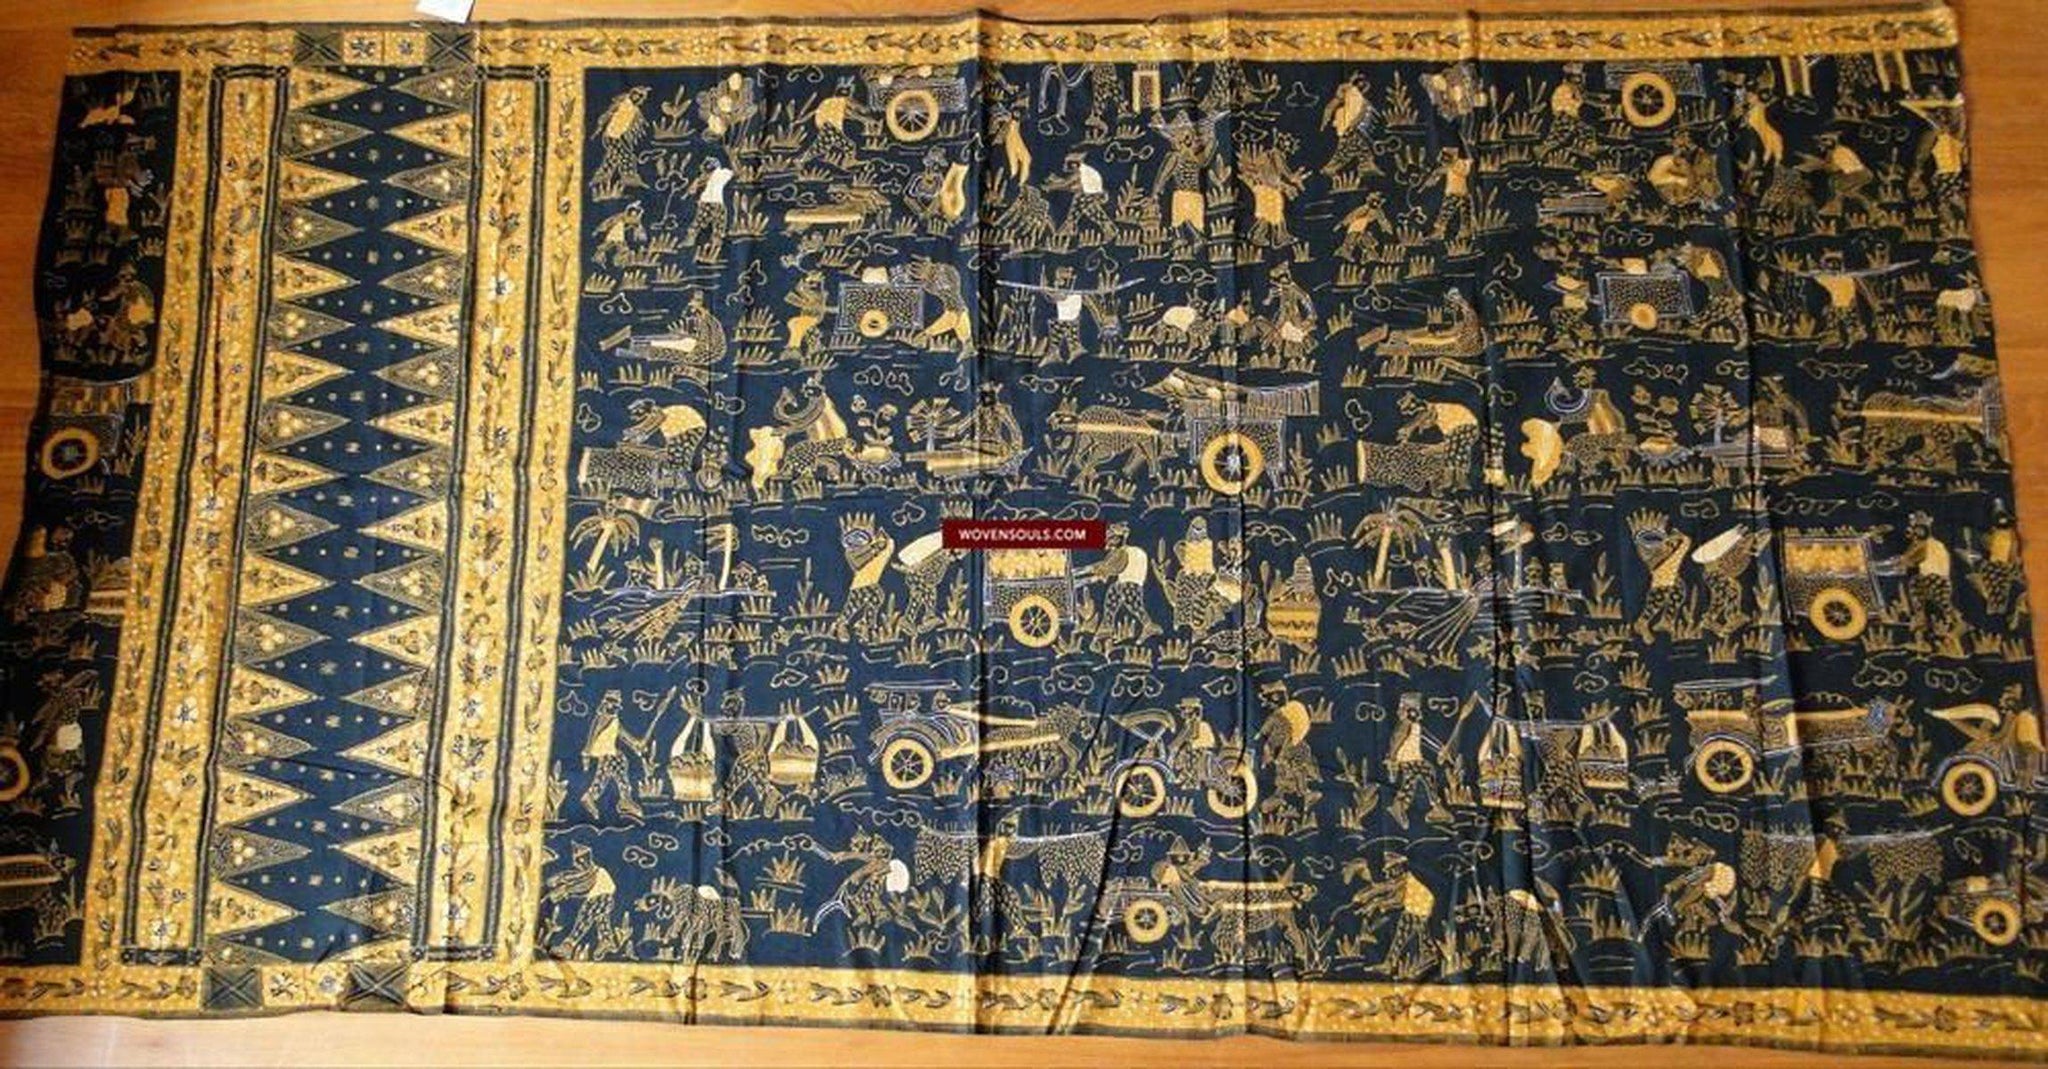 441 Javanese Figurative Batik Art - Scenes of Rural Farming-WOVENSOULS-Antique-Vintage-Textiles-Art-Decor